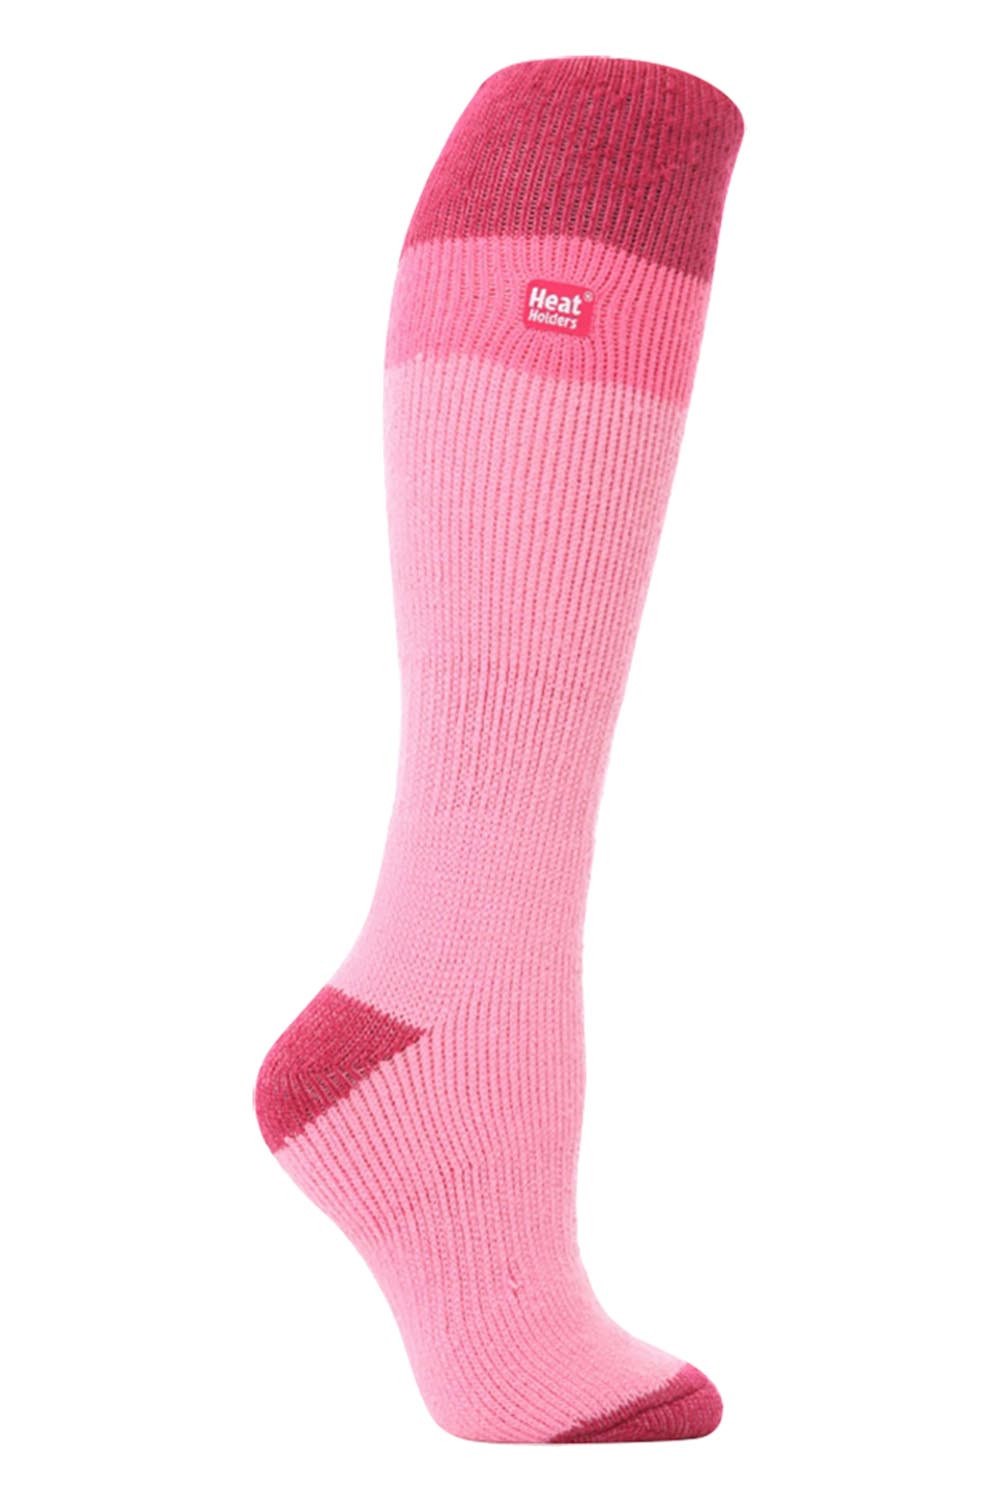 Womens Knee High Thermal Ski Socks -